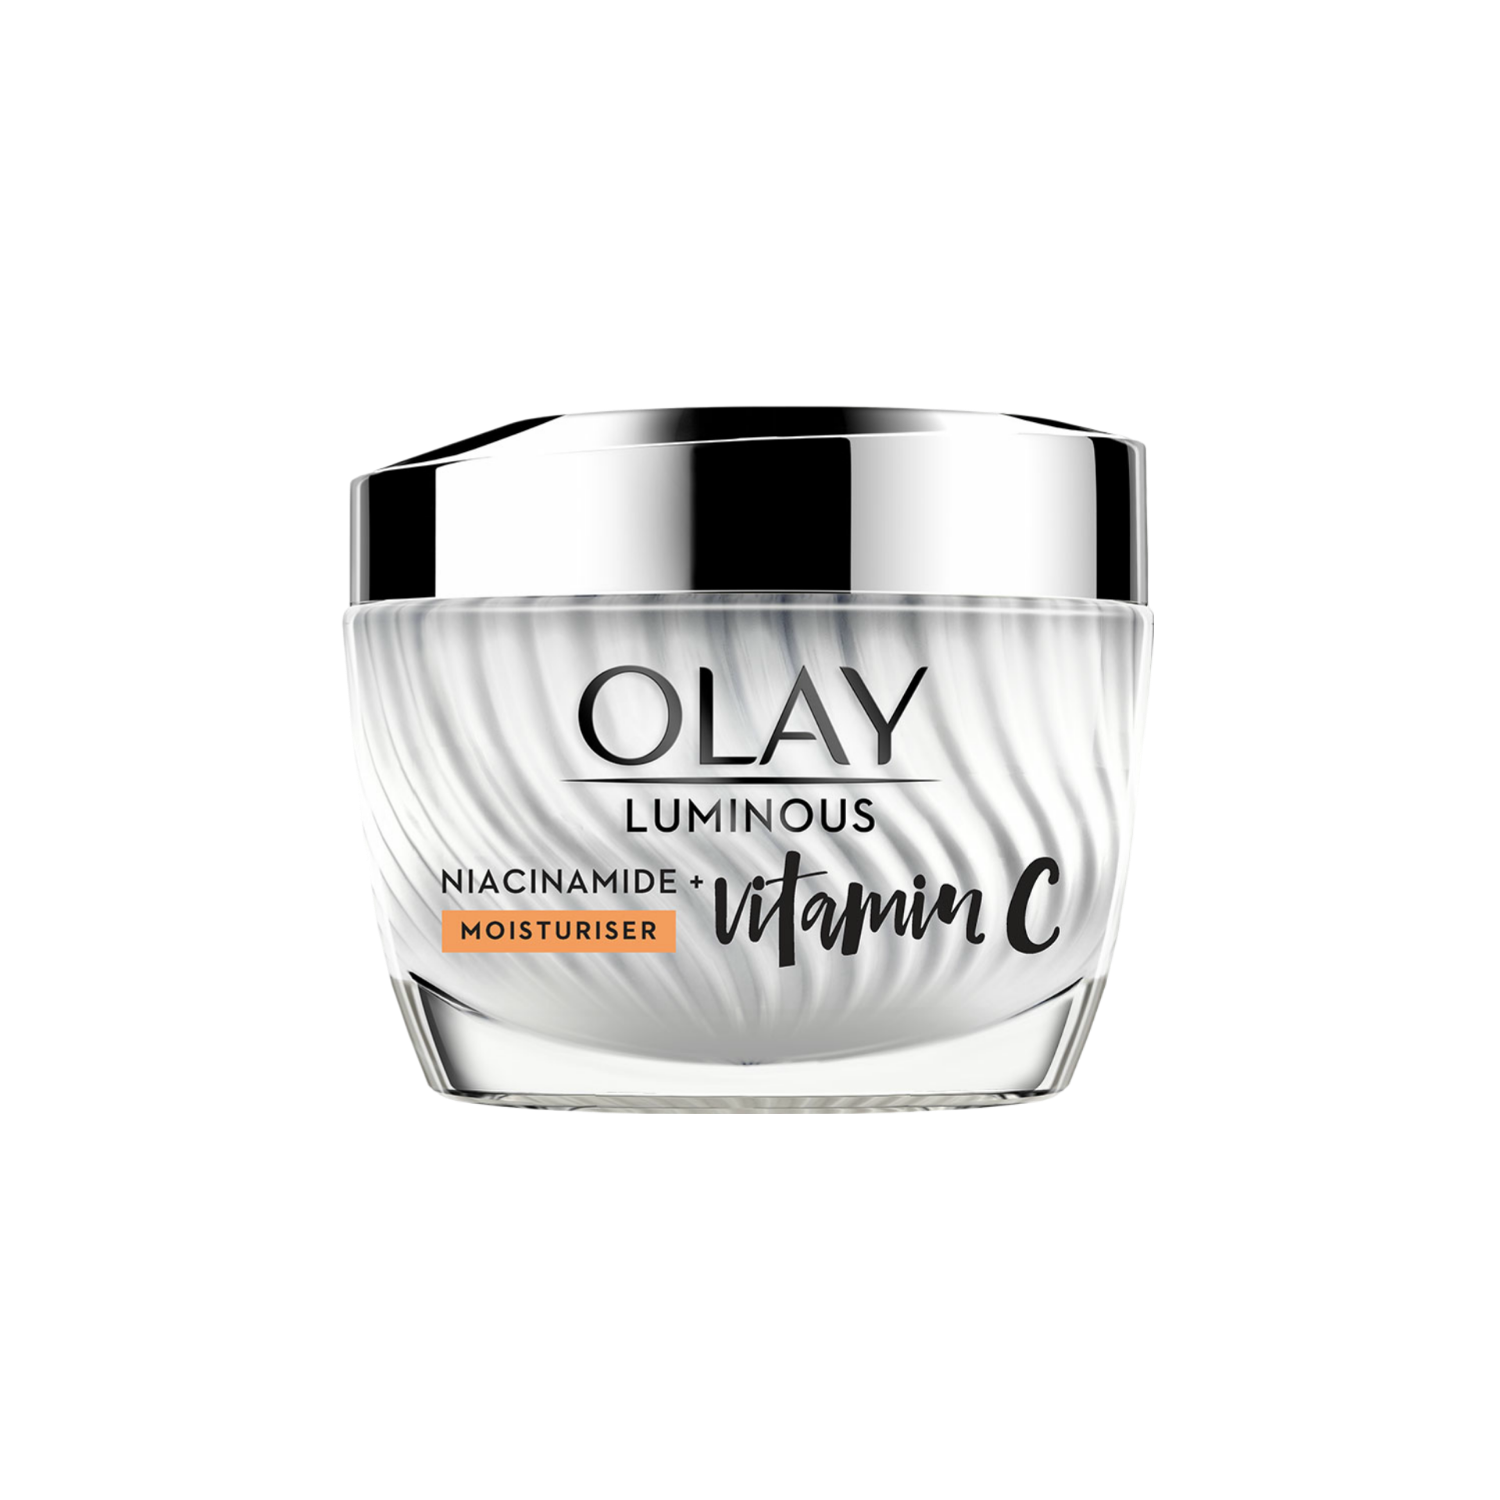 Olay Luminous Vitamin C Cream,50 gm| with 99% pure Niacinamide